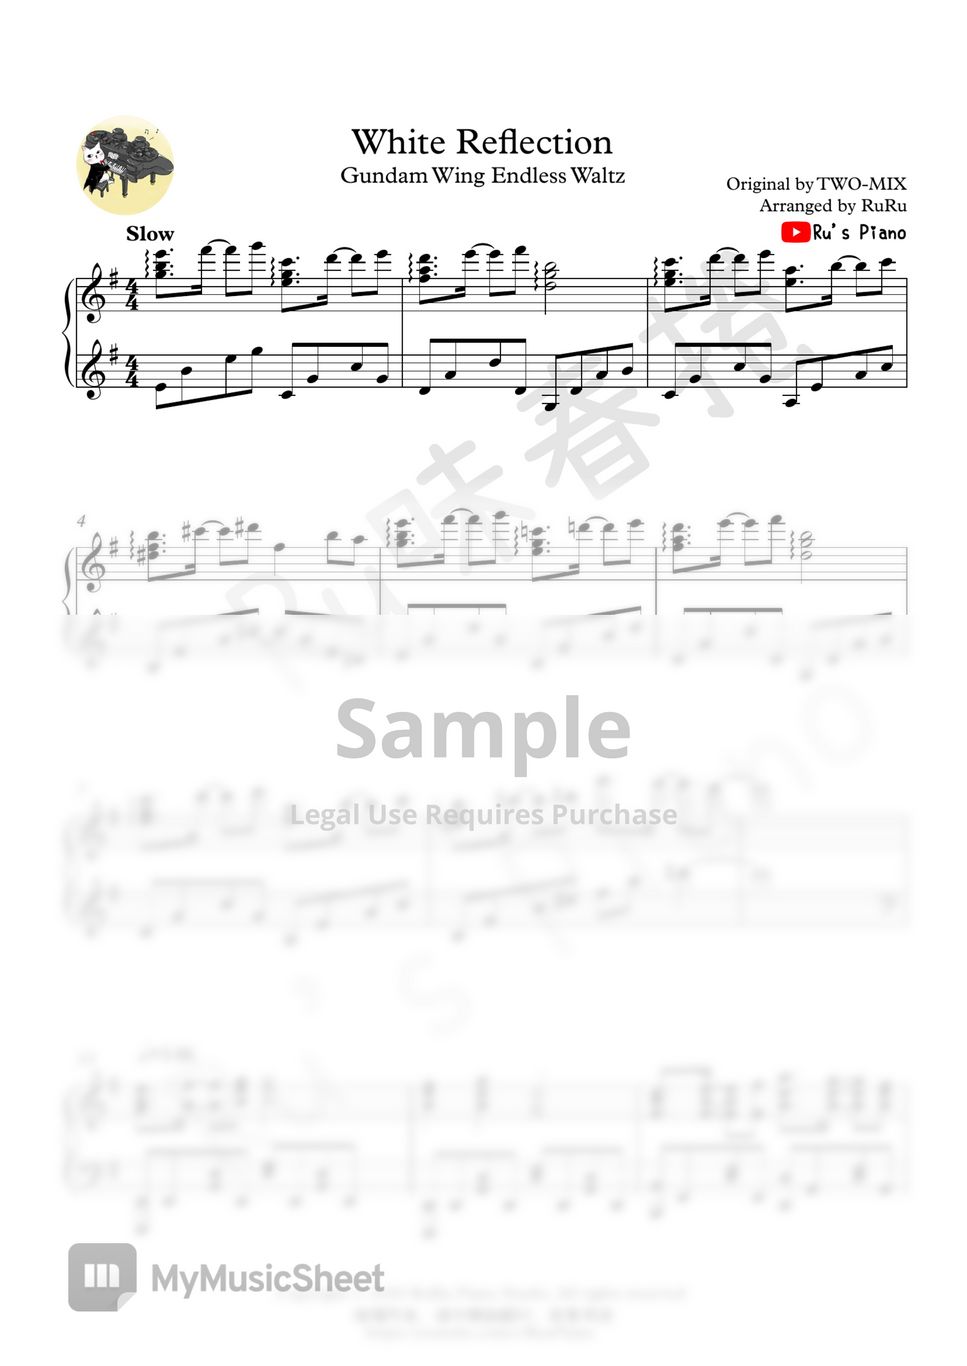 Gundam Wing - White Reflection - GundamW Endless Waltz by Ru's Piano